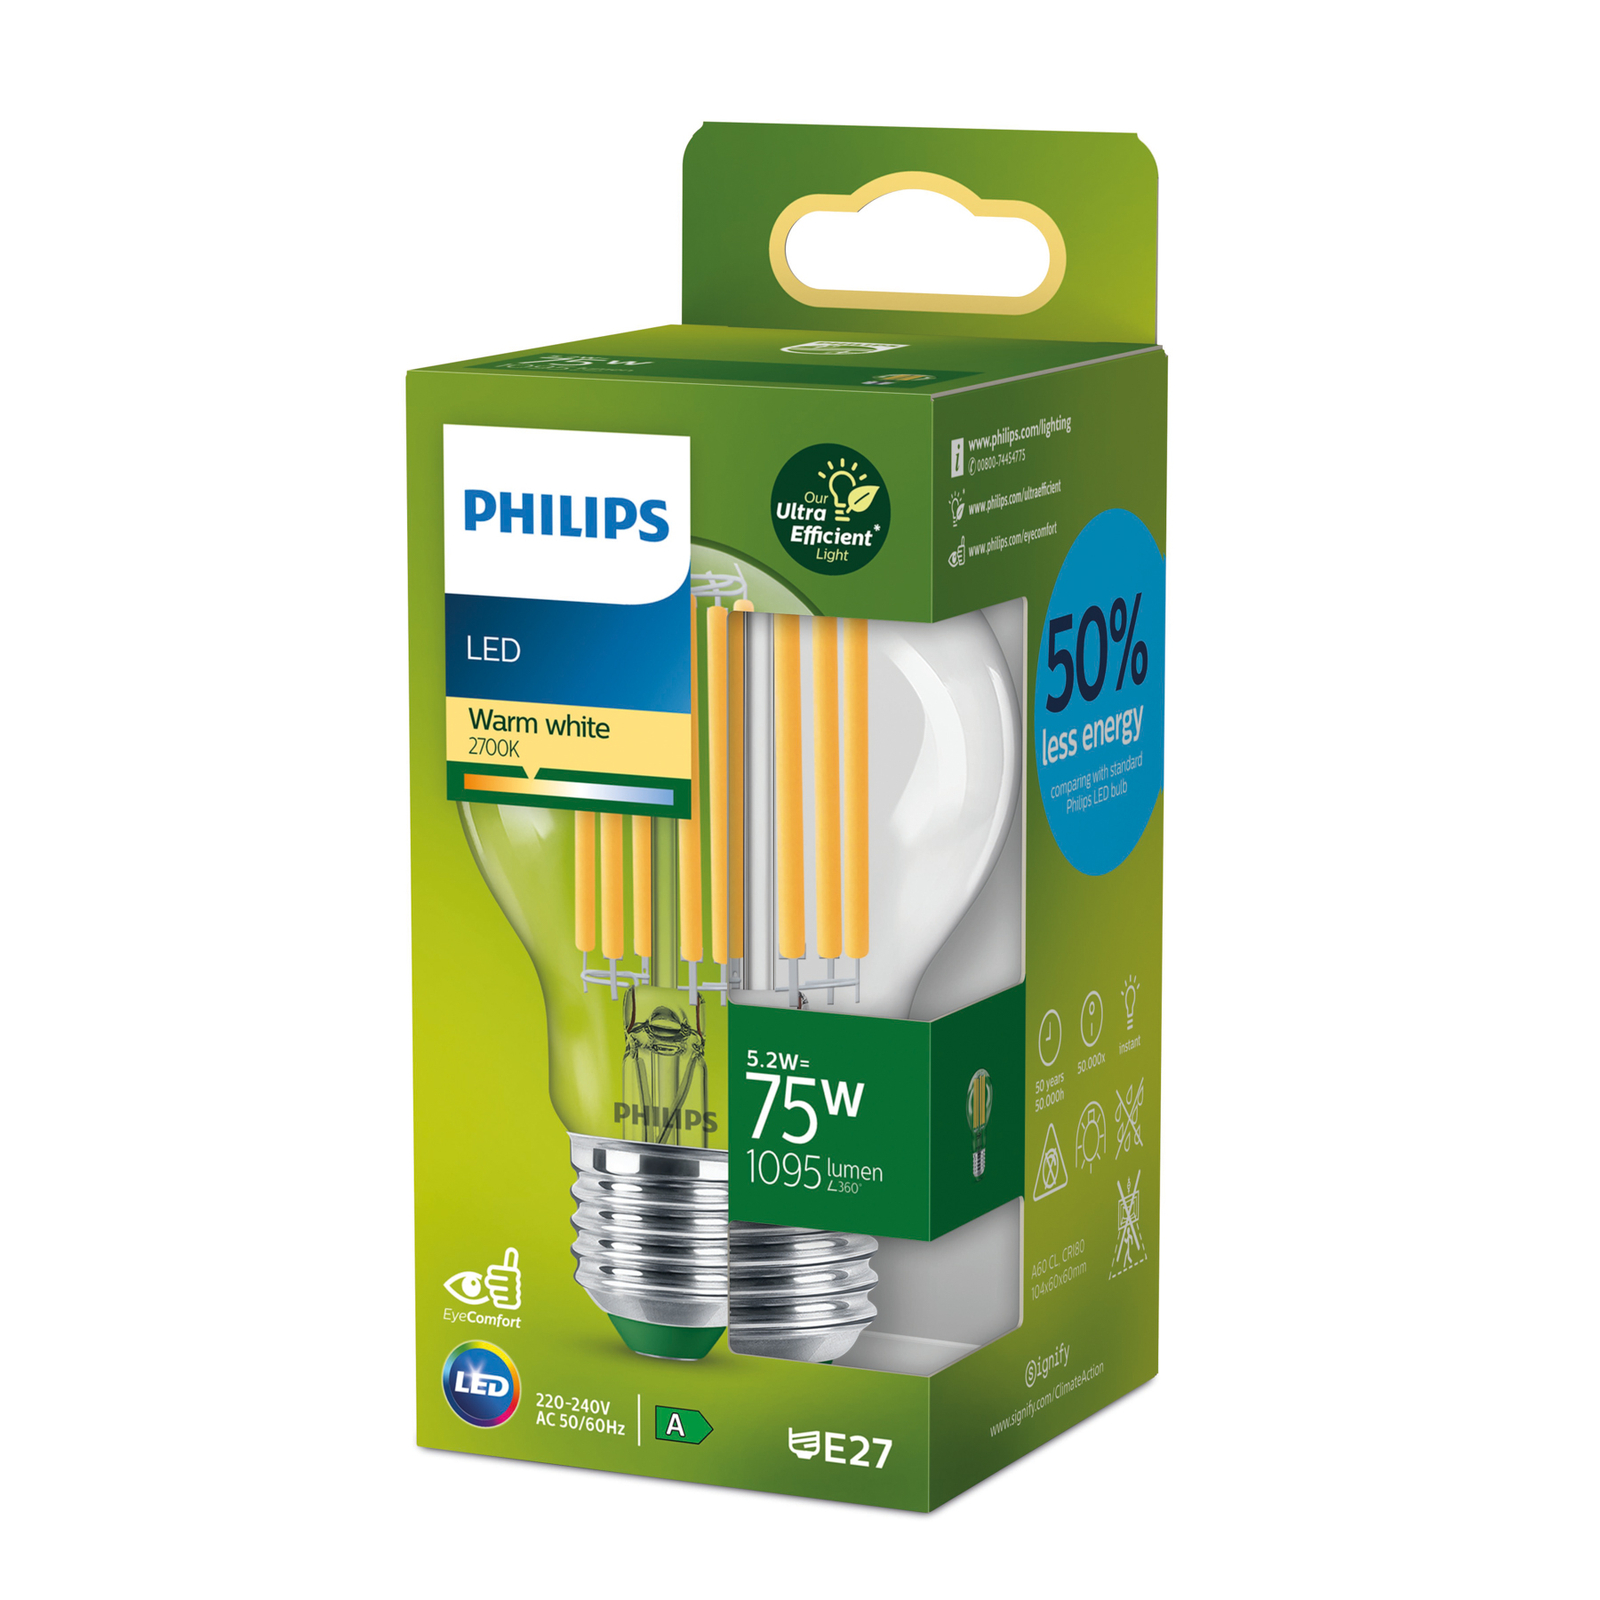 Philips E27 LED лампа A60 5,2W 1095lm 2 700K clear